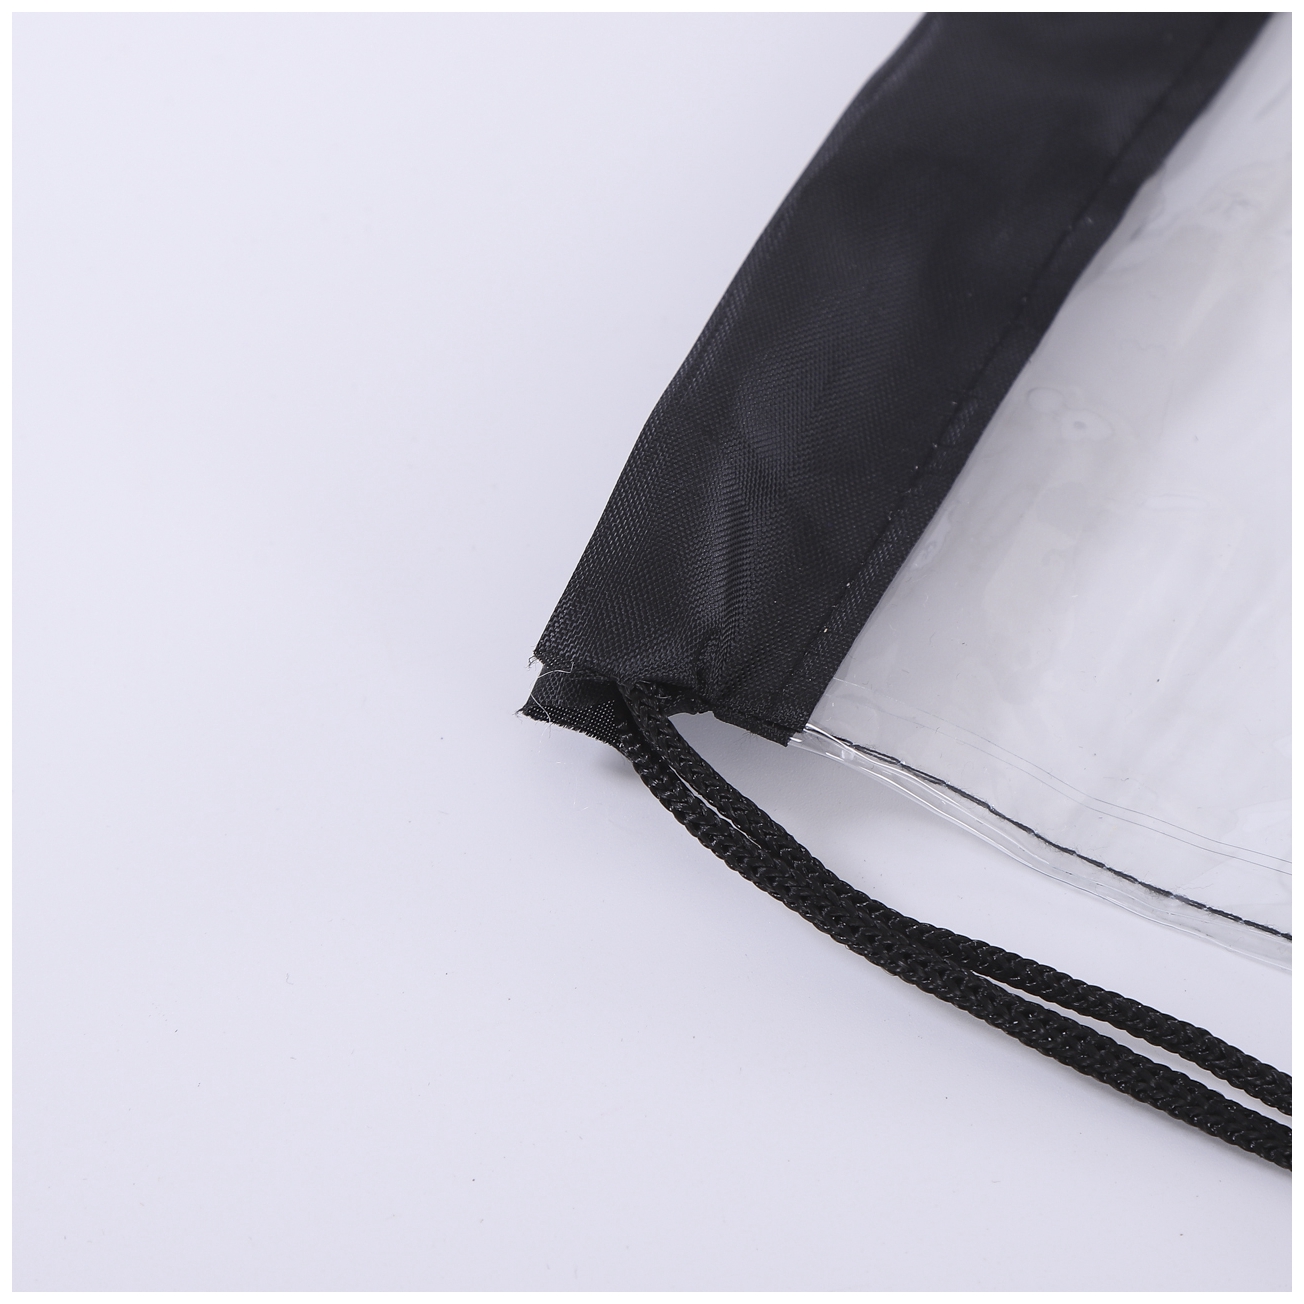 Cheap Transparent PVC Clear Drawstring Backpack Bags